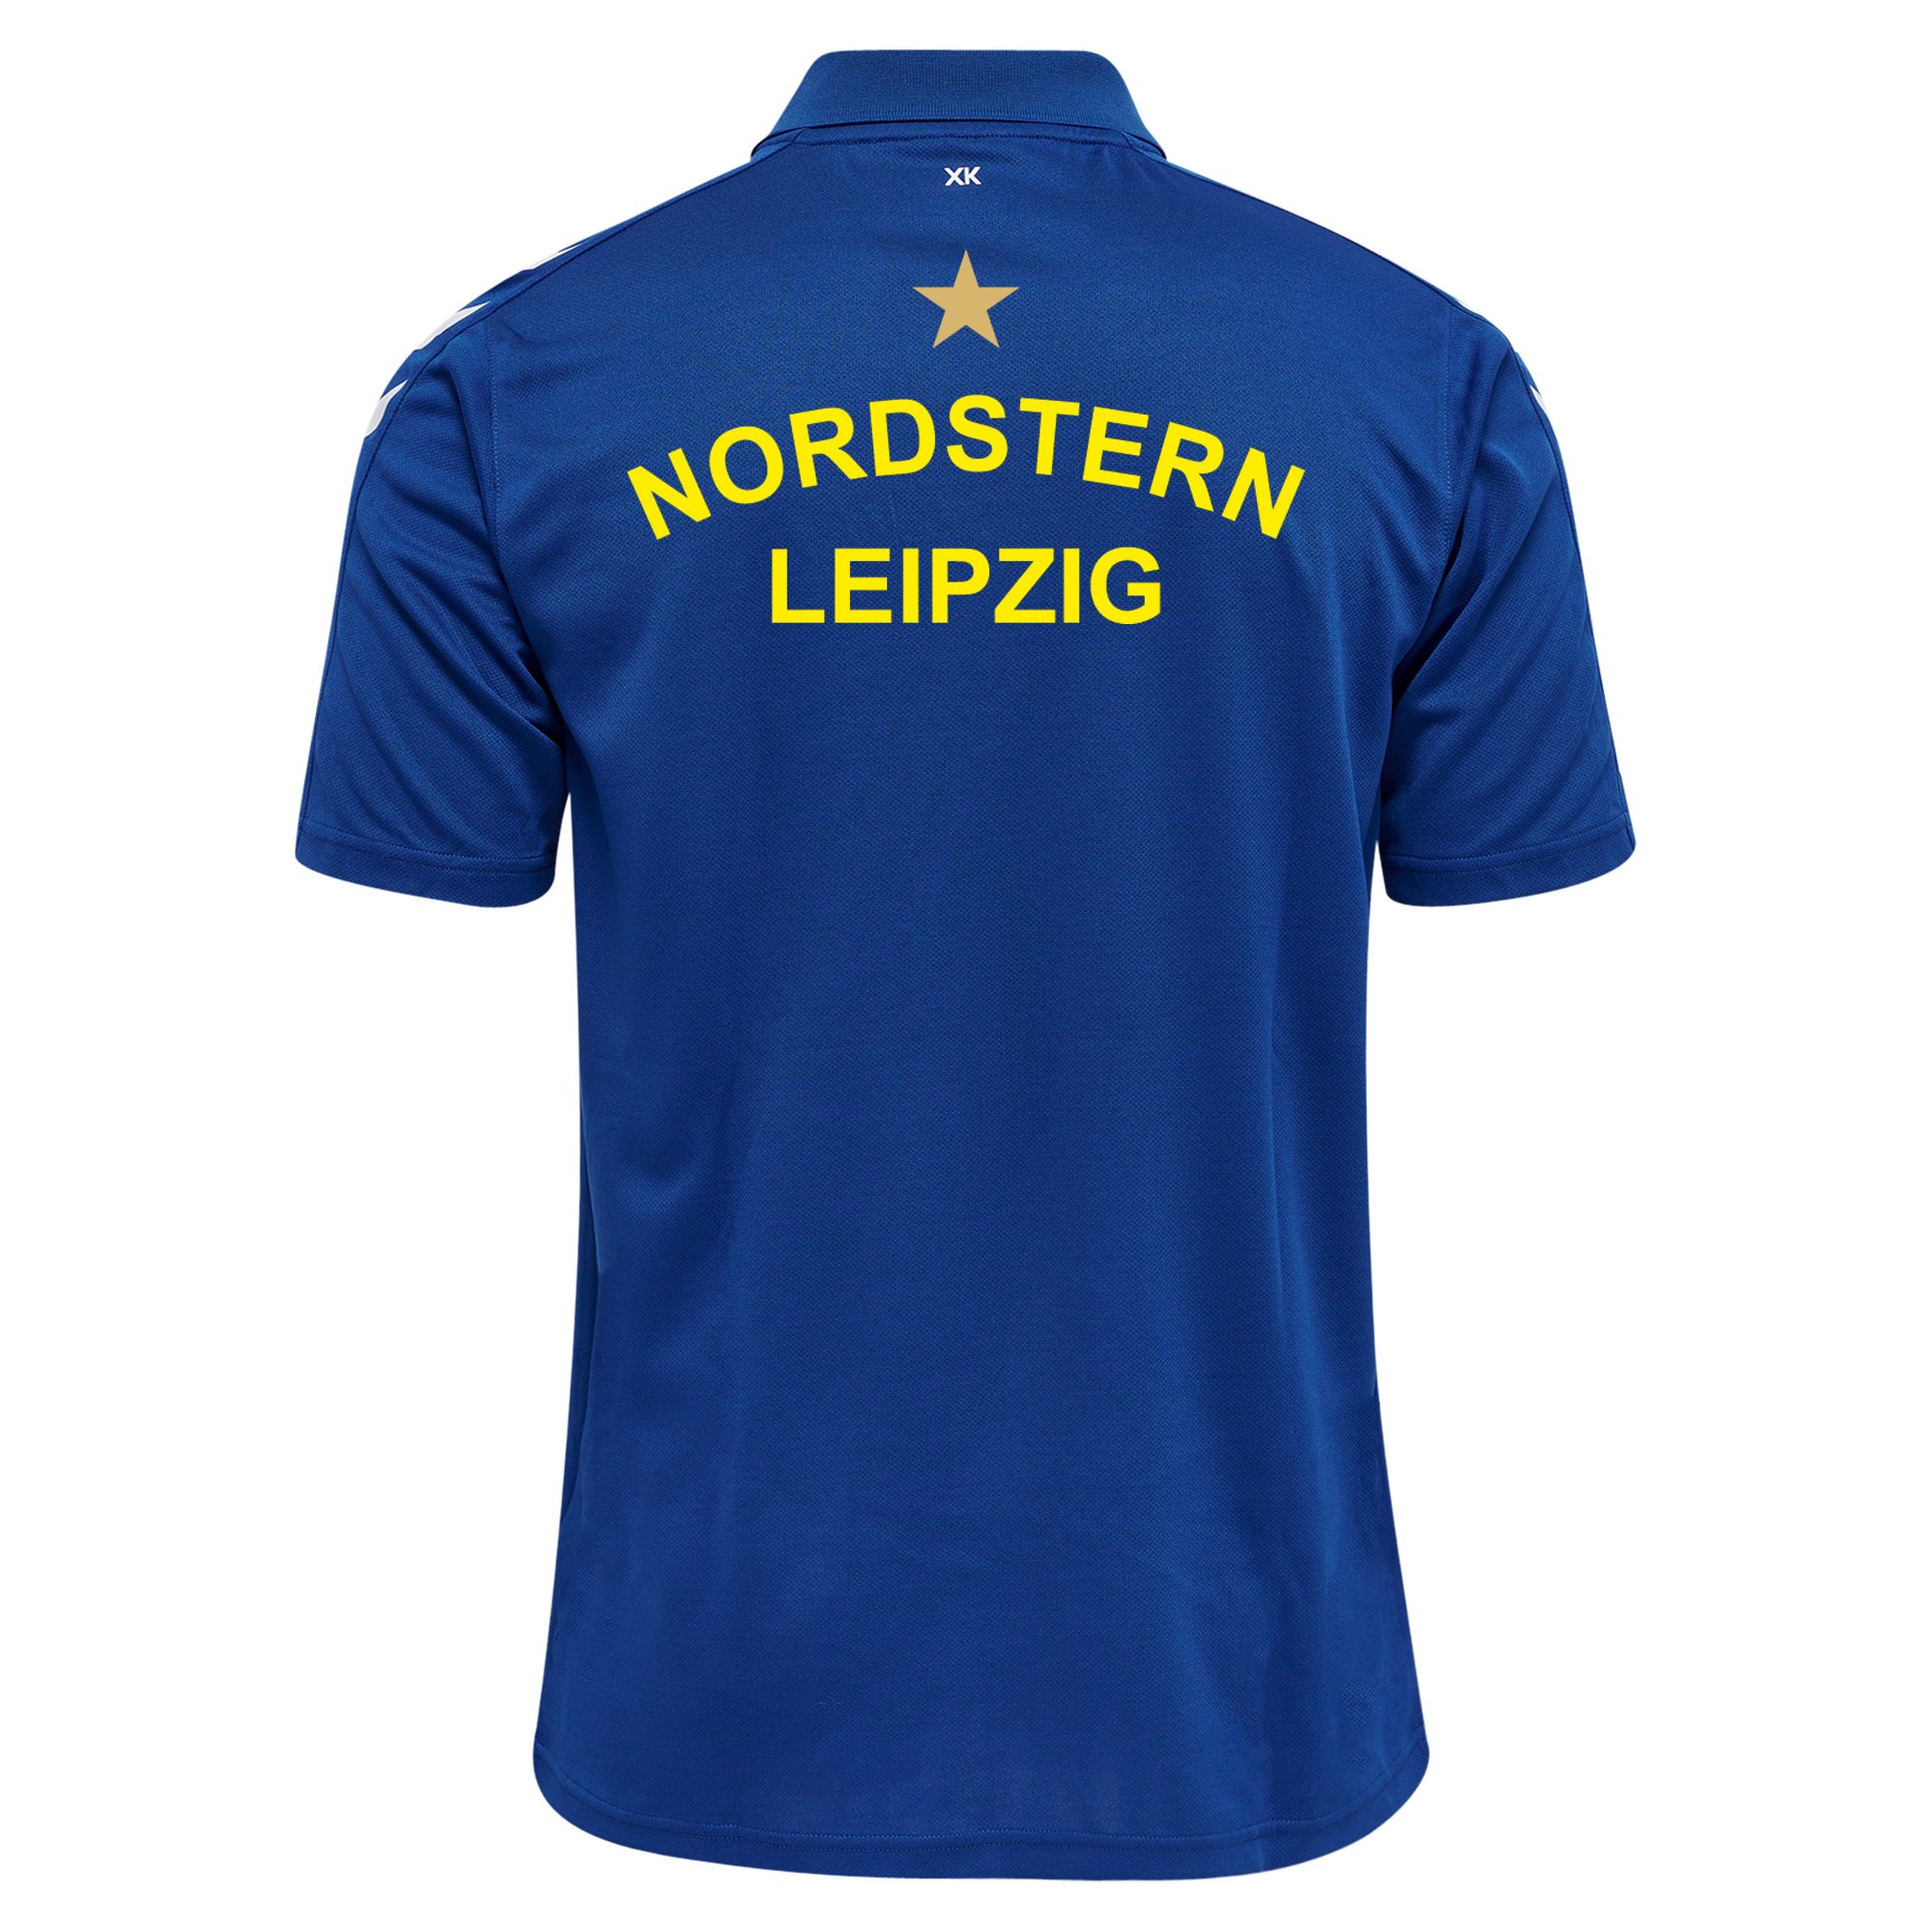 Nordstern Leipzig Functional Poloshirt